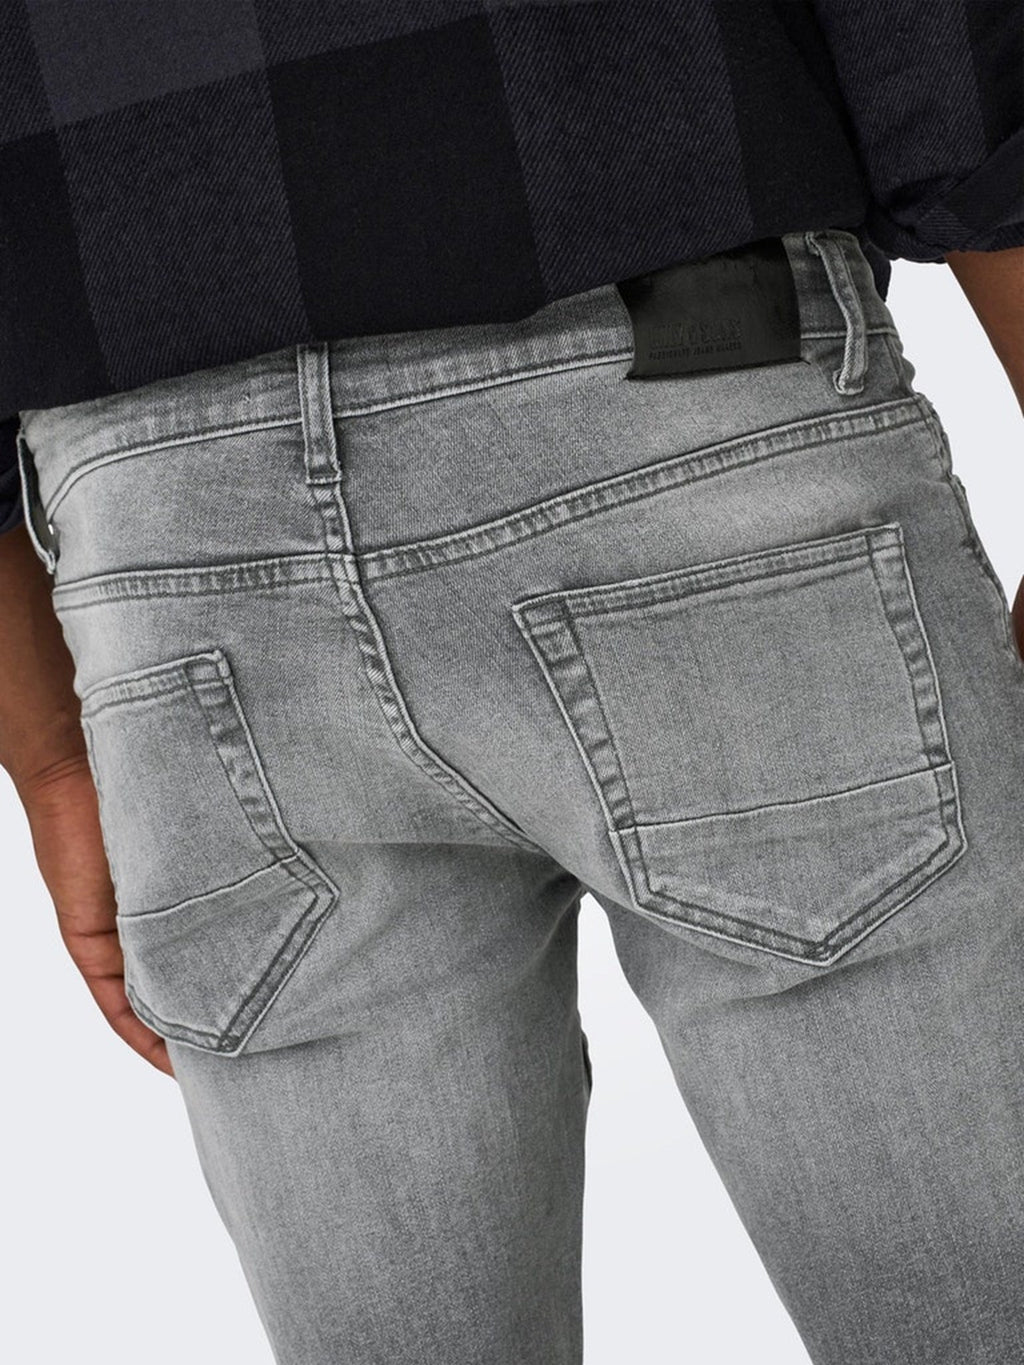 Jeans liath caol loom - liath